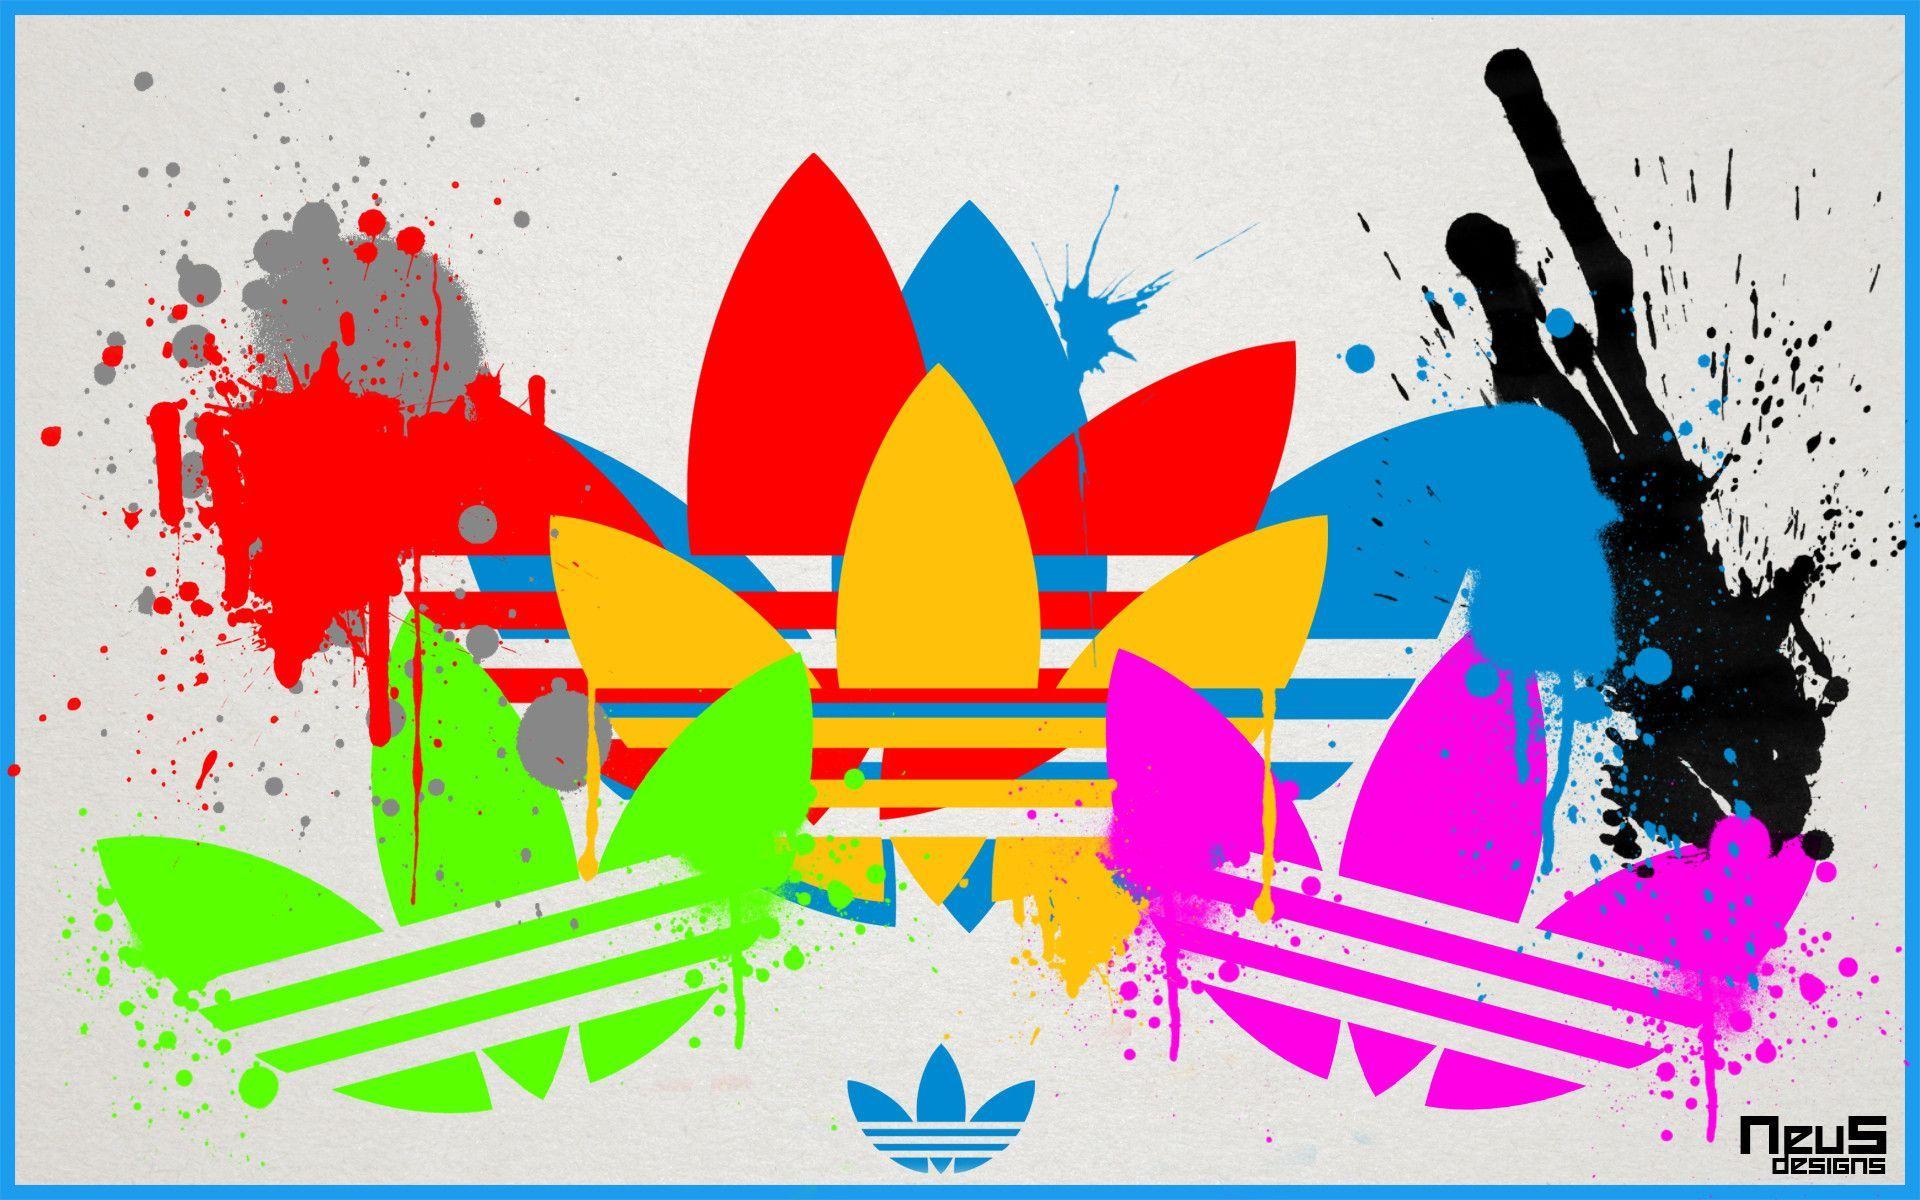 Adidas Originals Logo Wallpapers